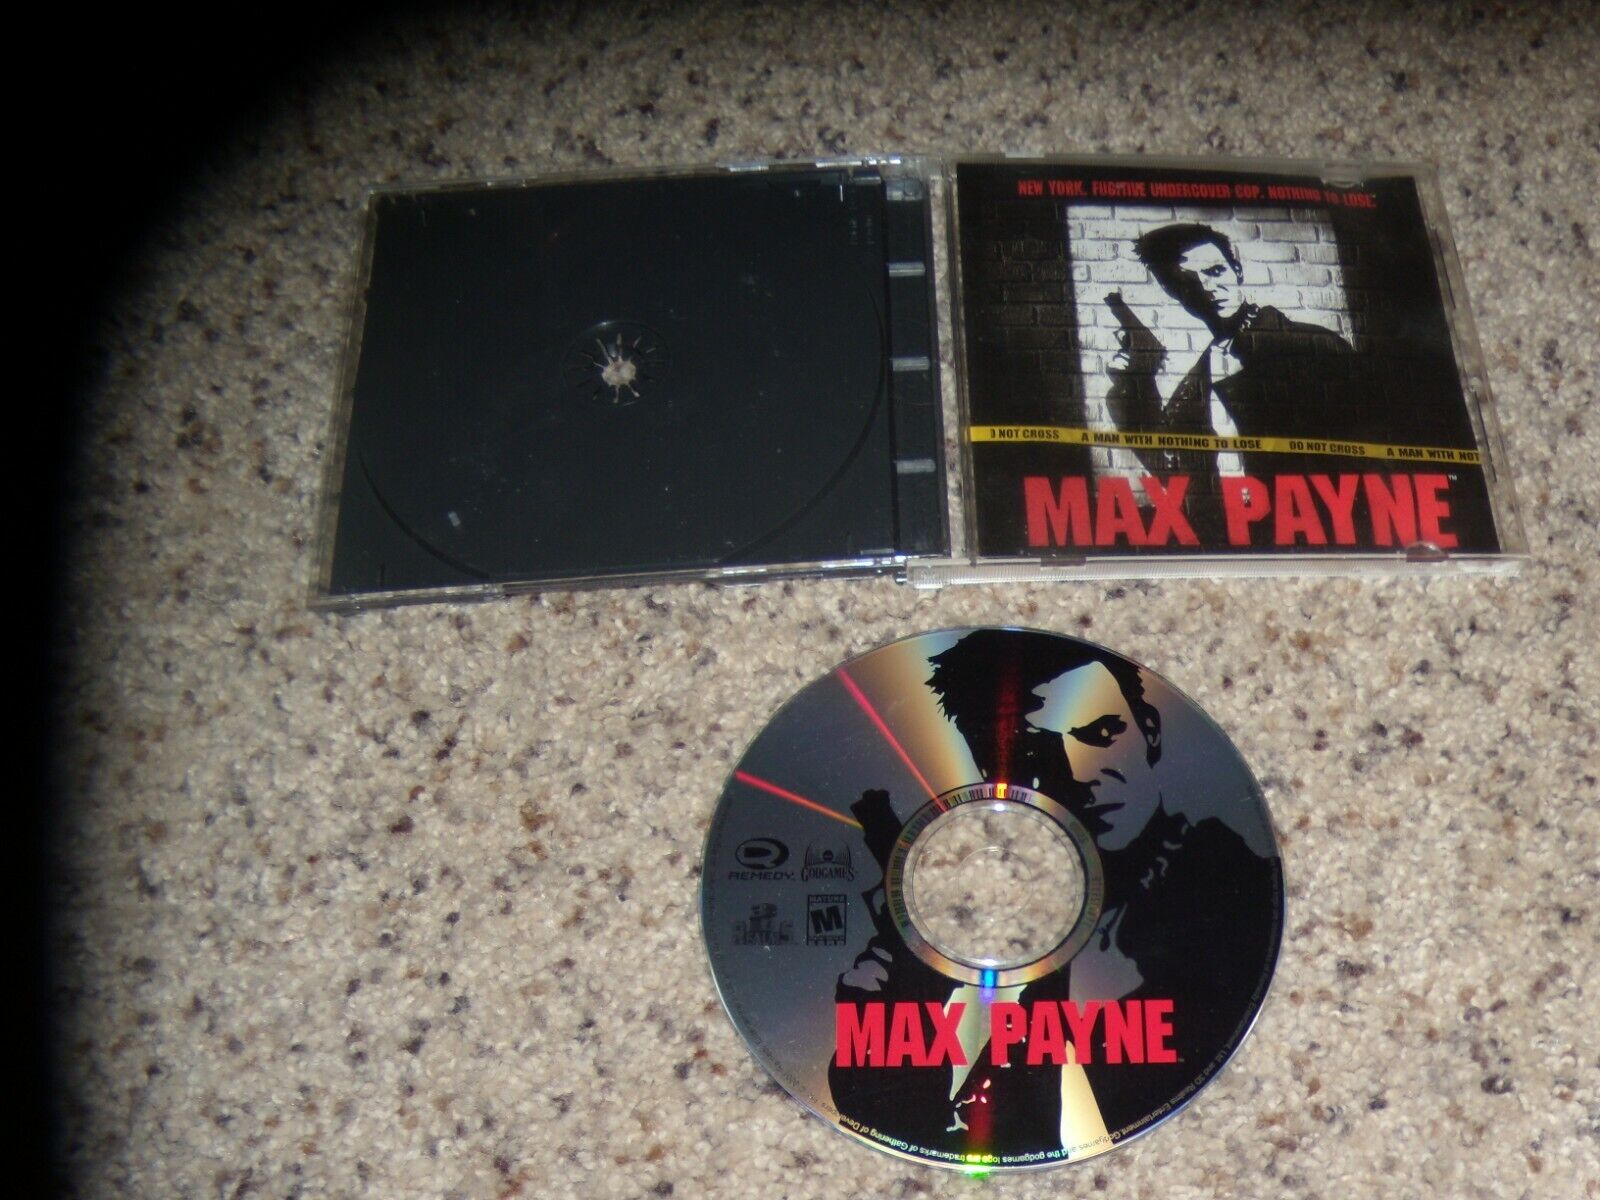 Max Payne PC game